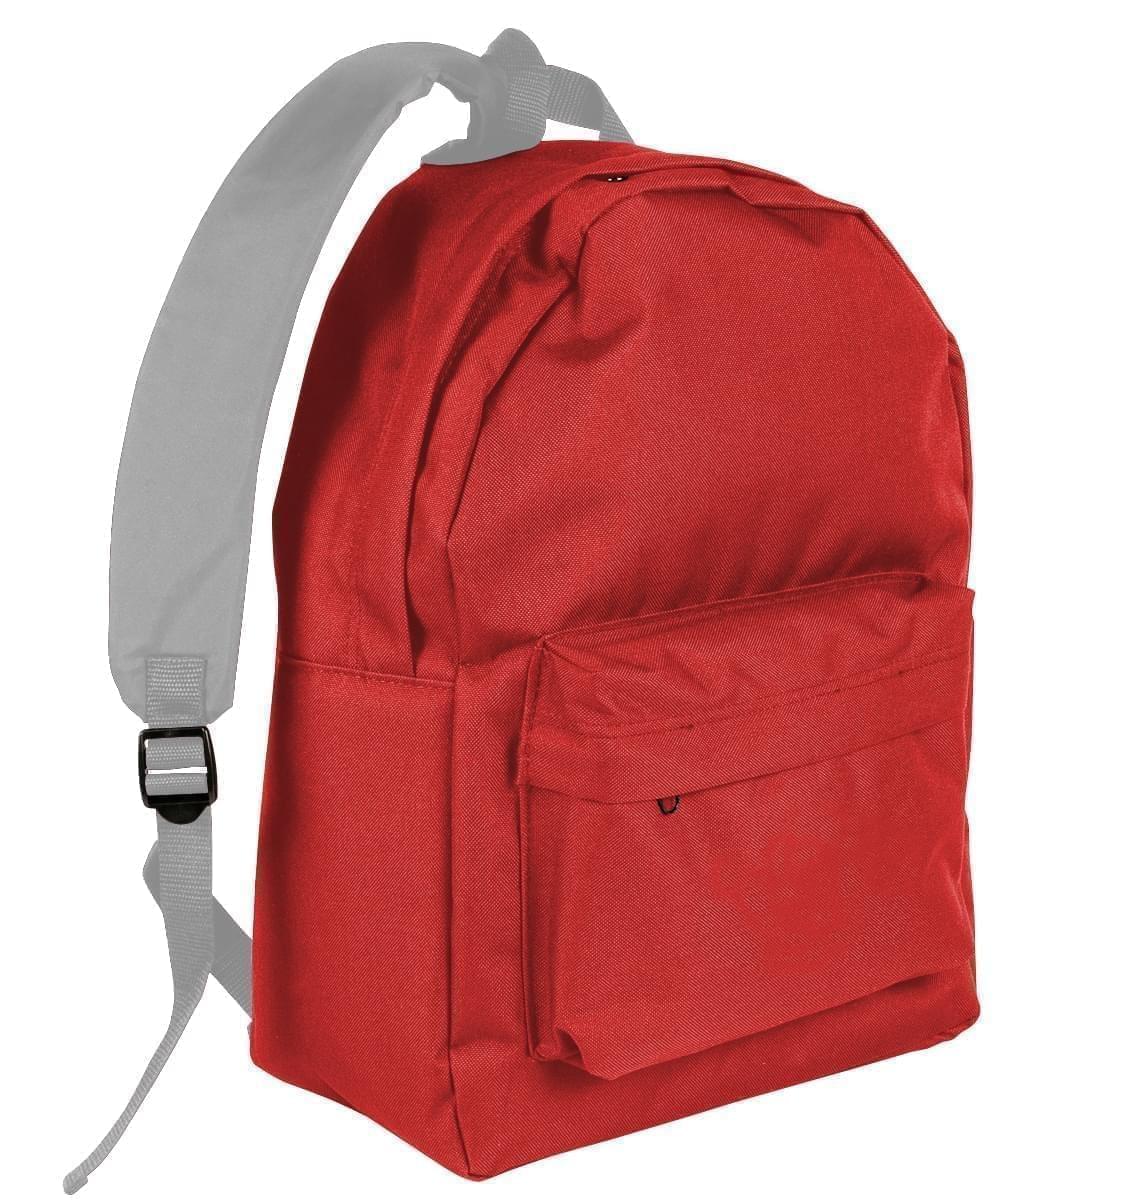 USA Made Nylon Poly Backpack Knapsacks, Red-Grey, 8960-AZU